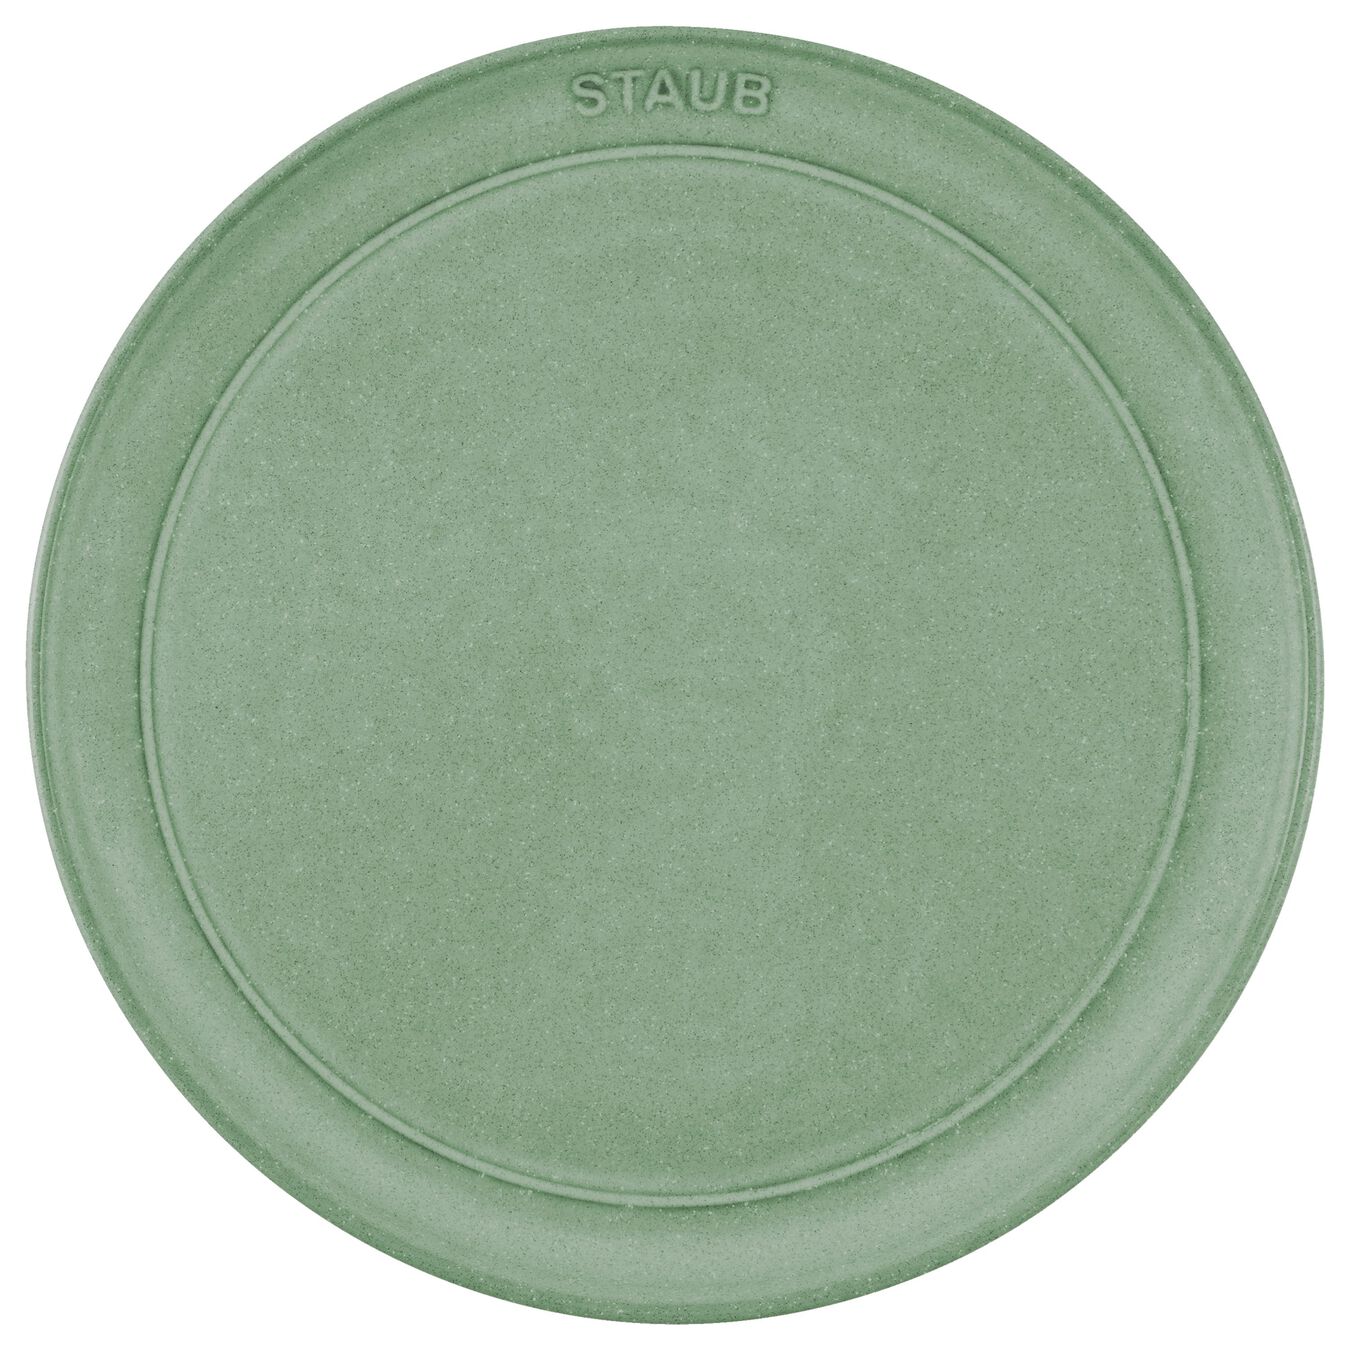 Prato plano 22 cm, Cerâmica, Verde seco,,large 2